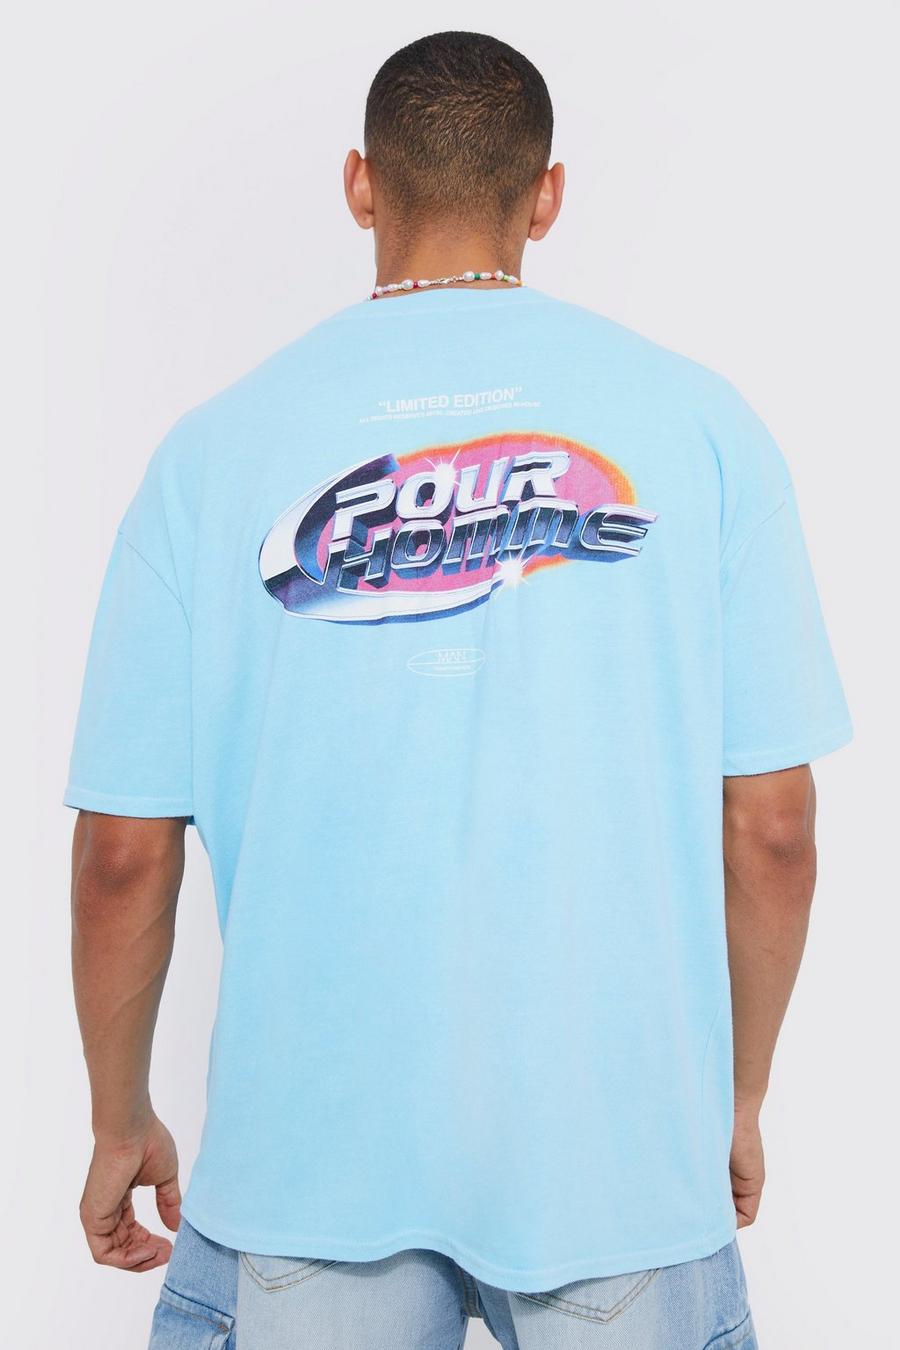 Aqua Oversized Extended Neck Chrome T-shirt